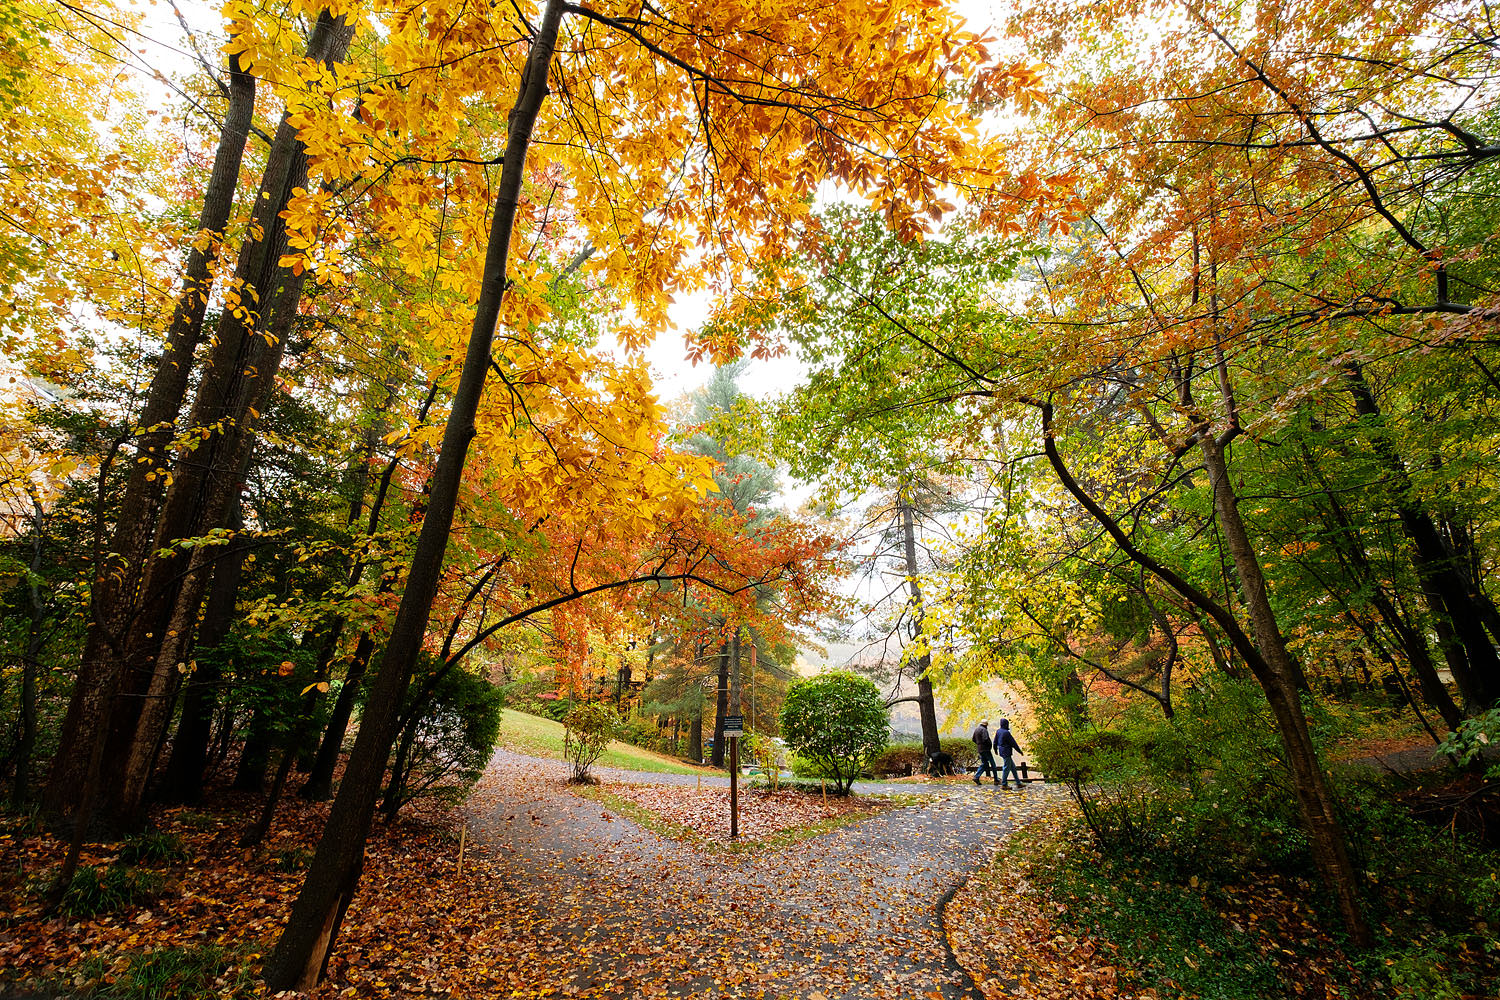 Fall in Reston, Virginia